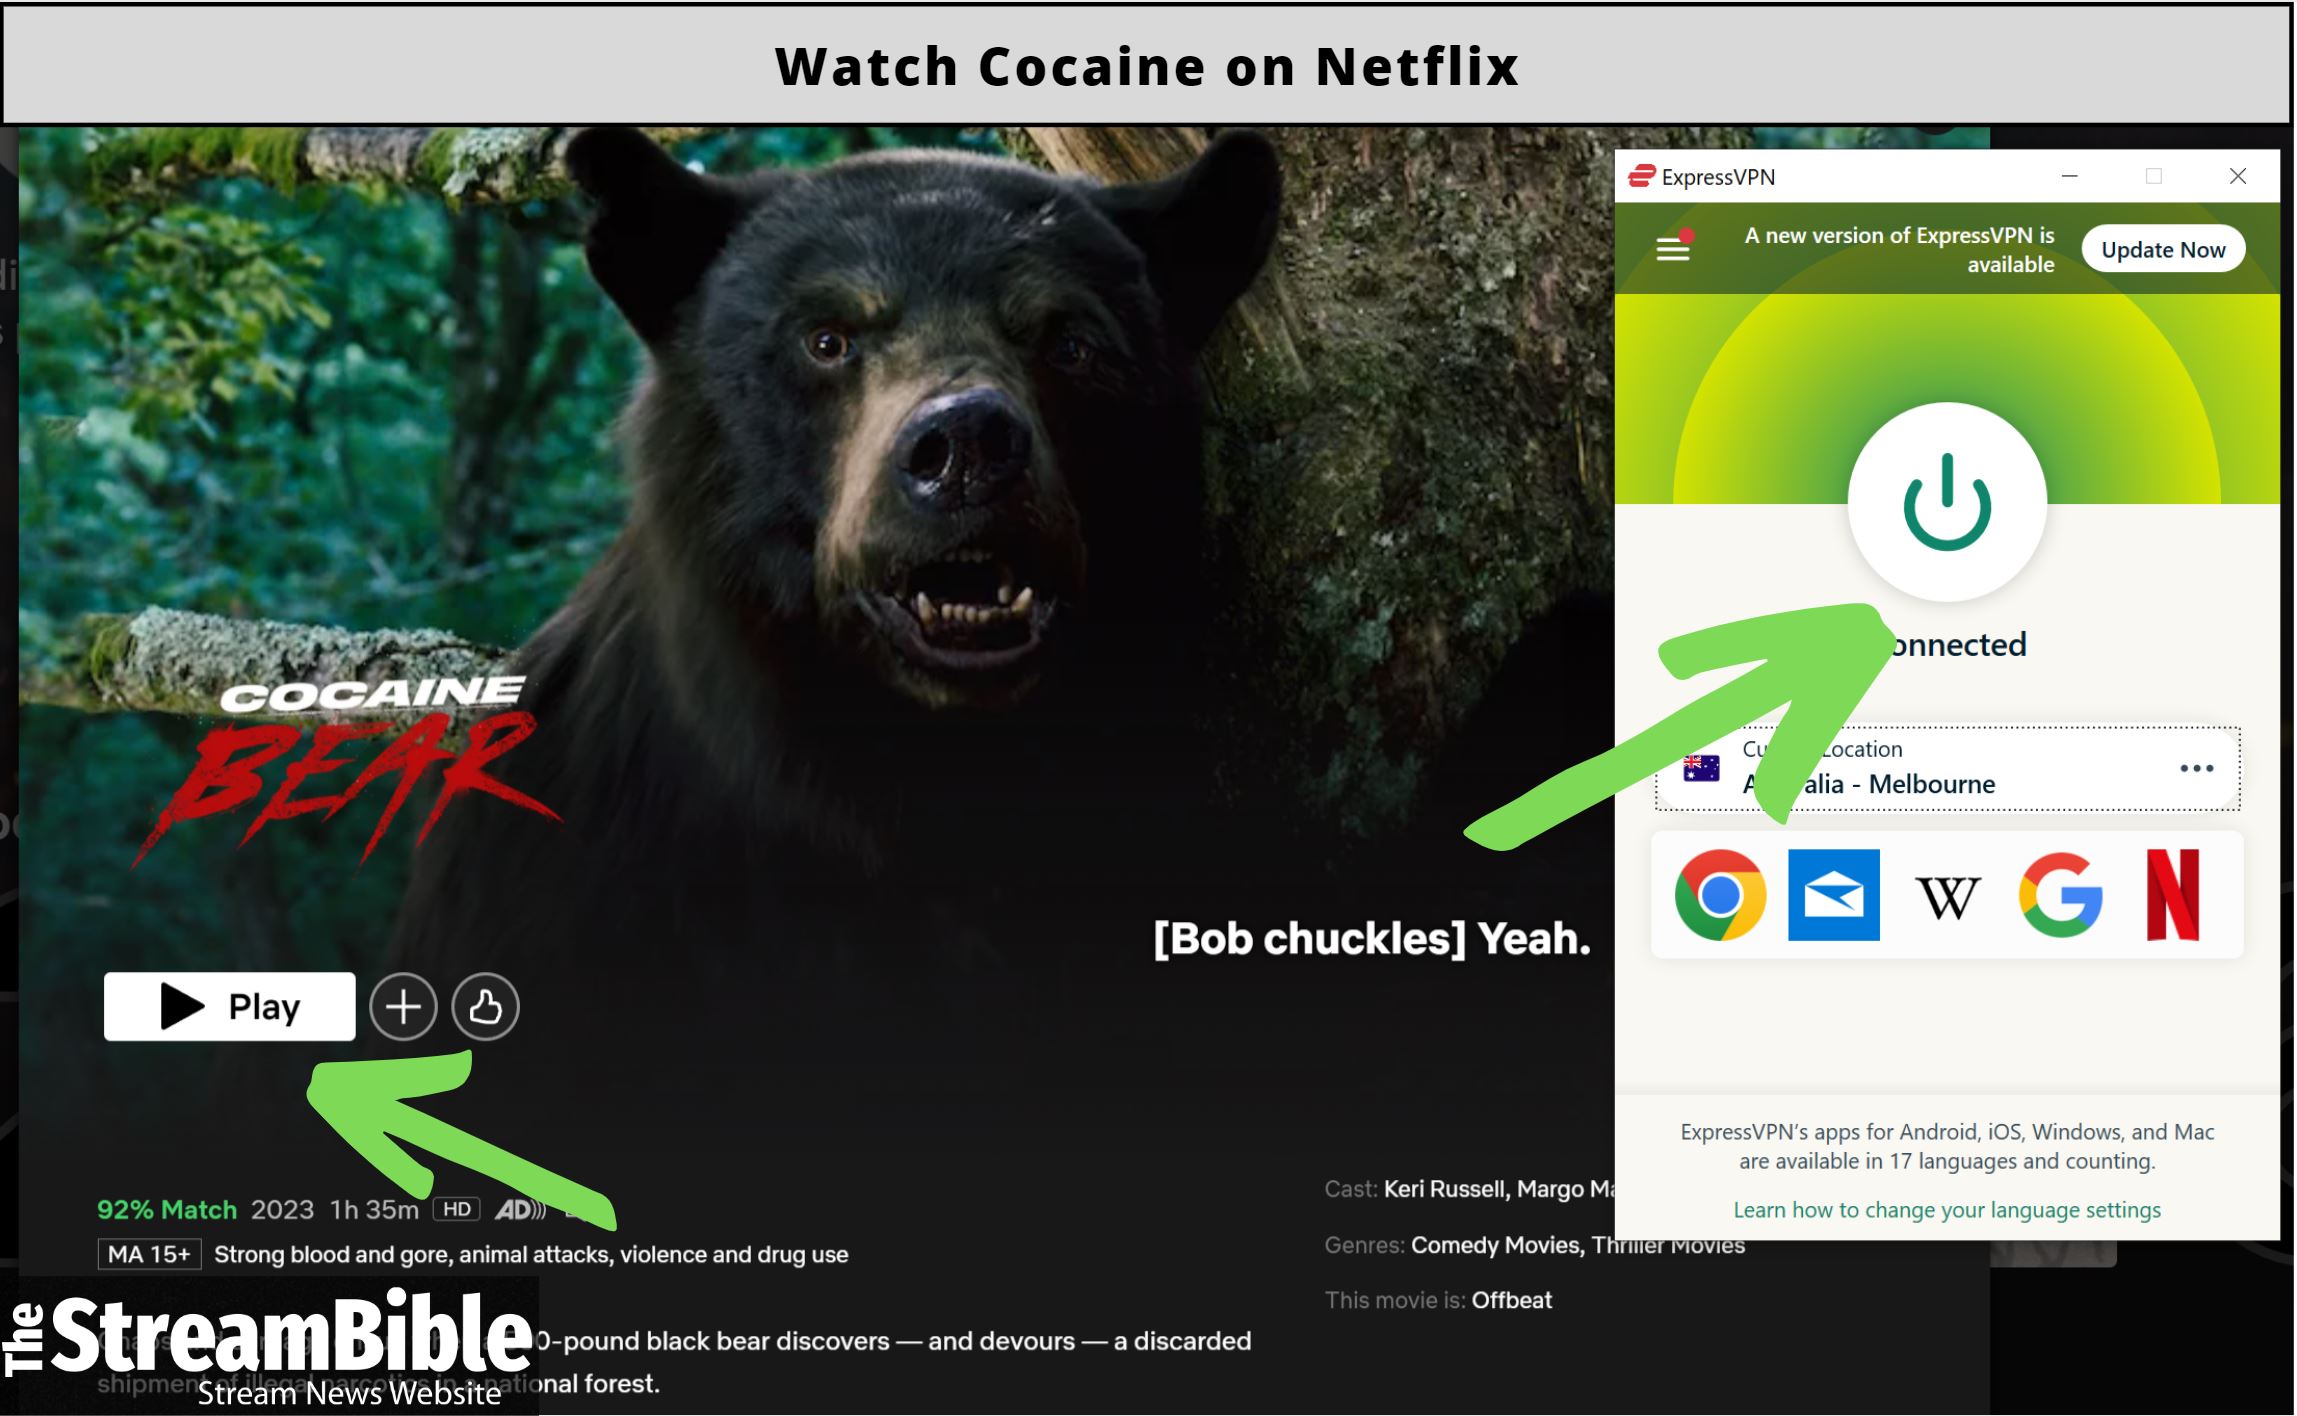 watch Cocaine Bear on Netflix in 2023?